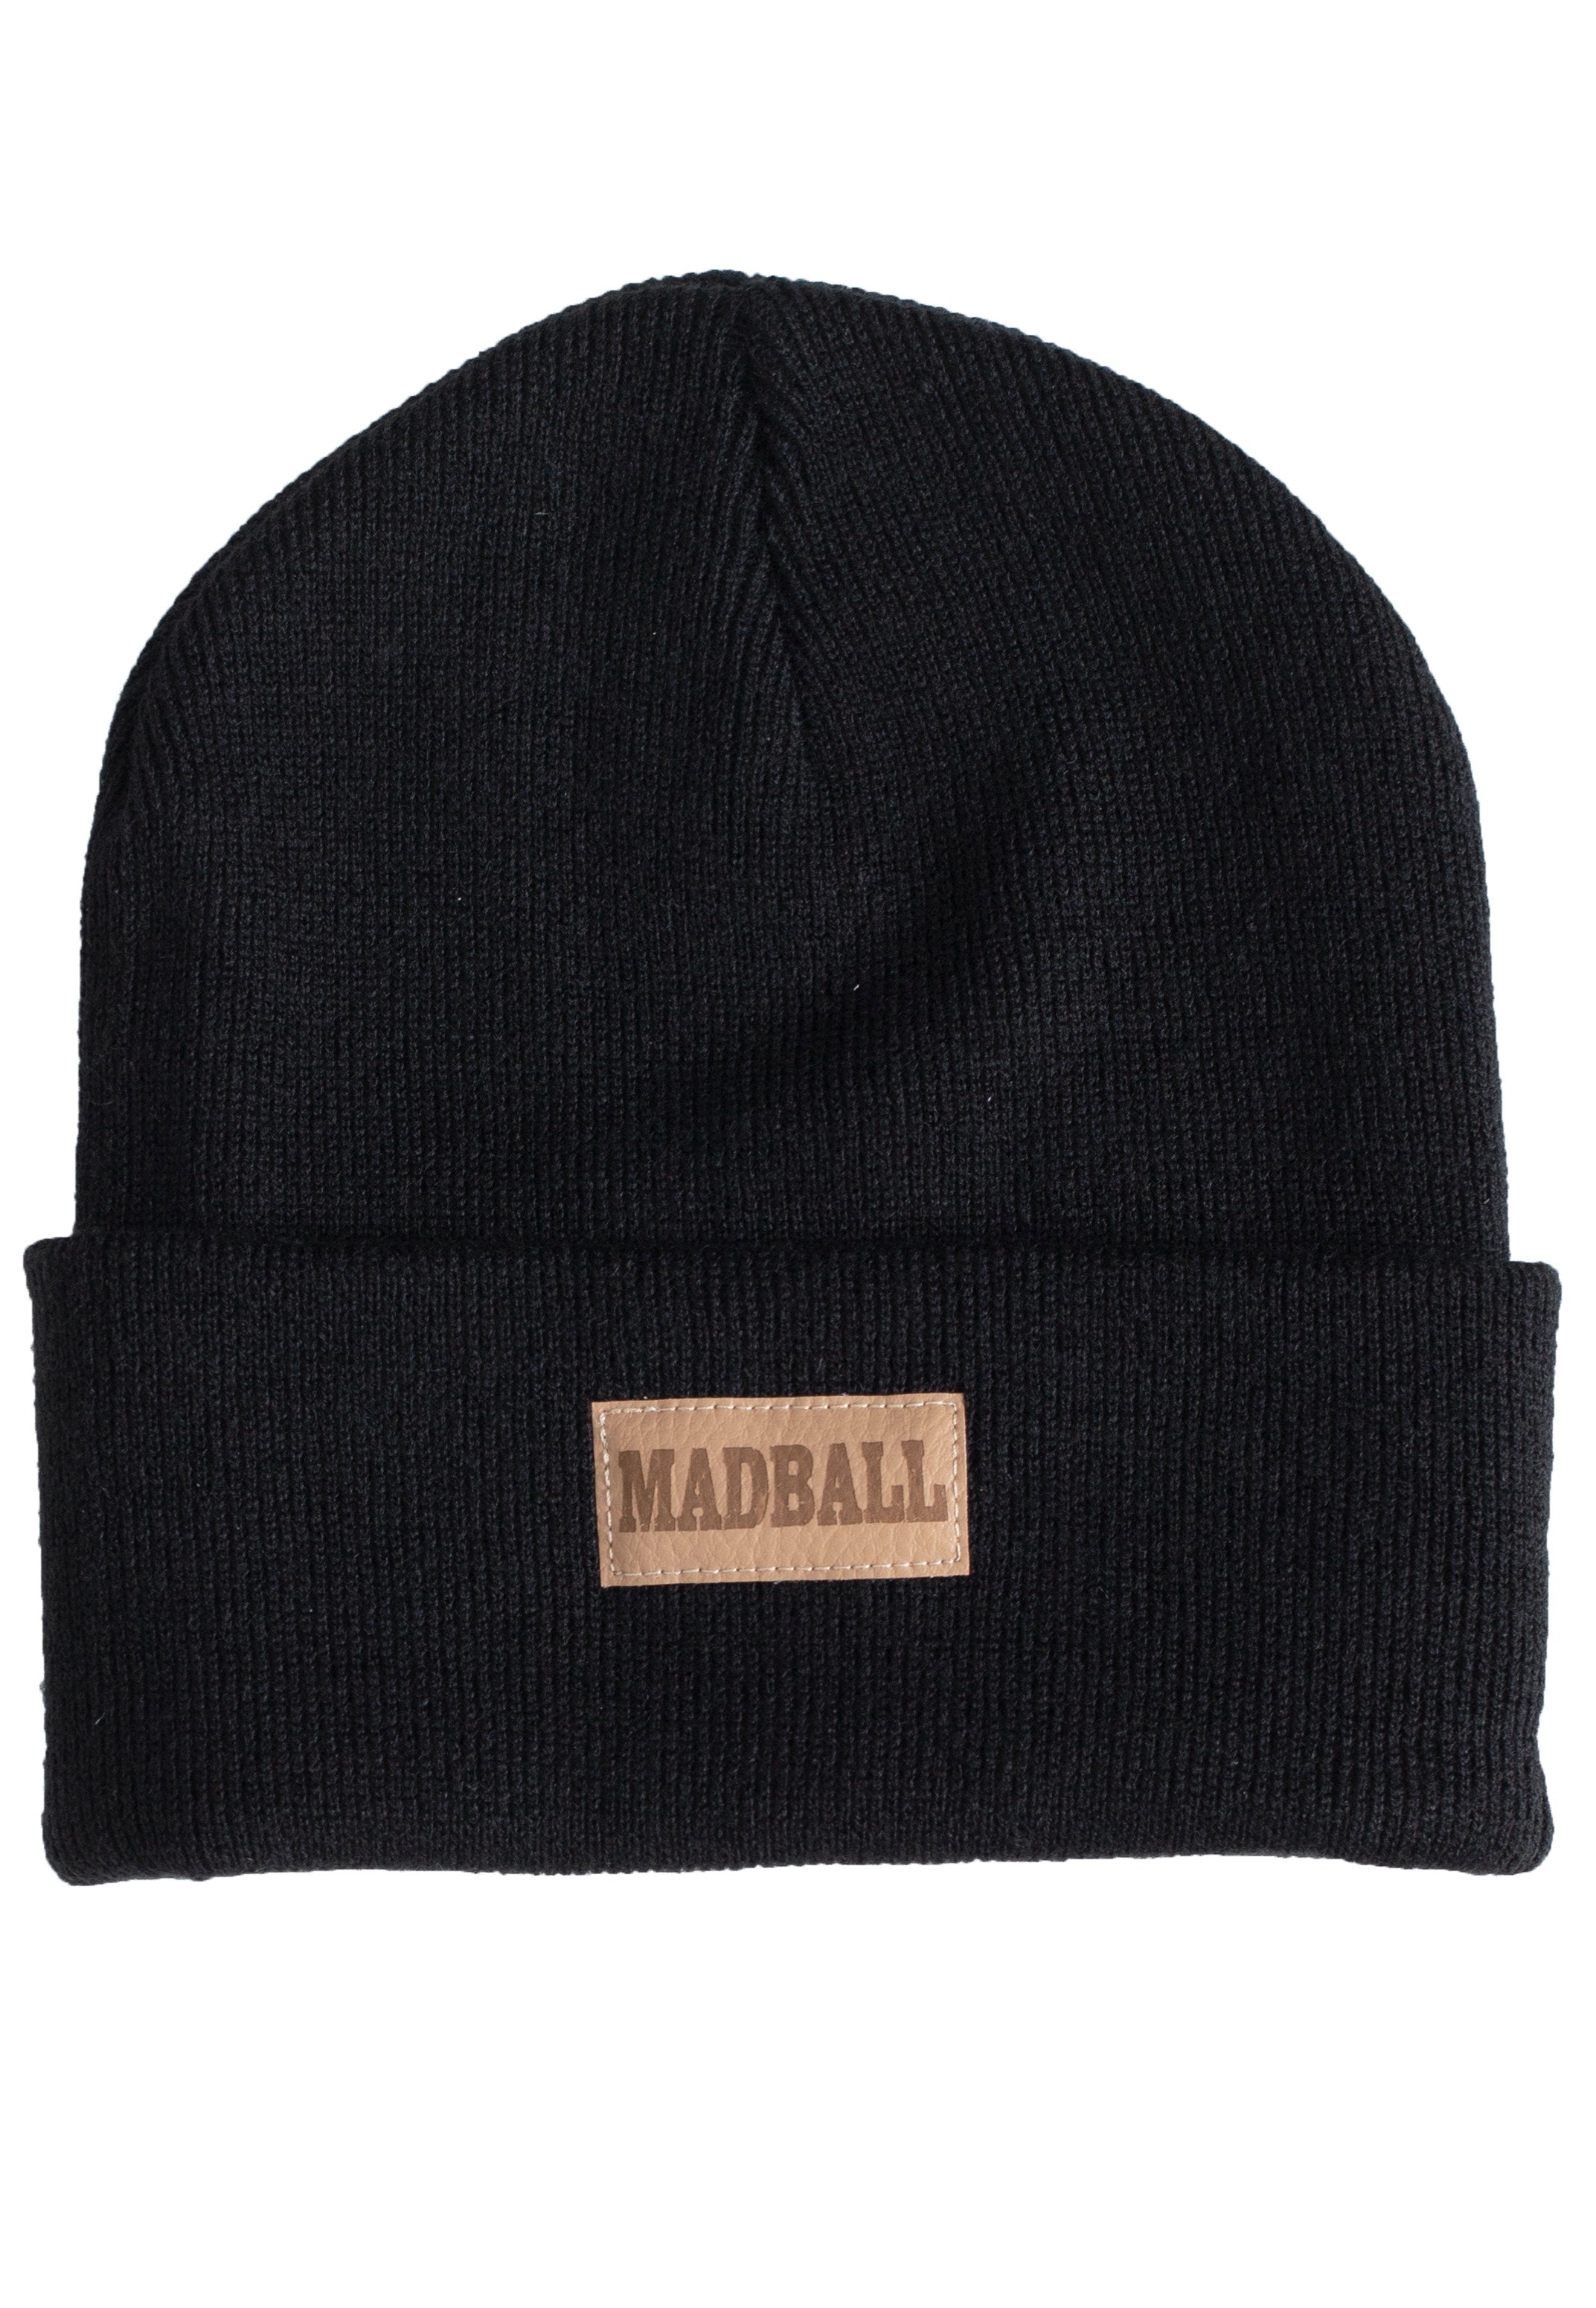 Madball - Logo Fake Leather Patch - Beanie